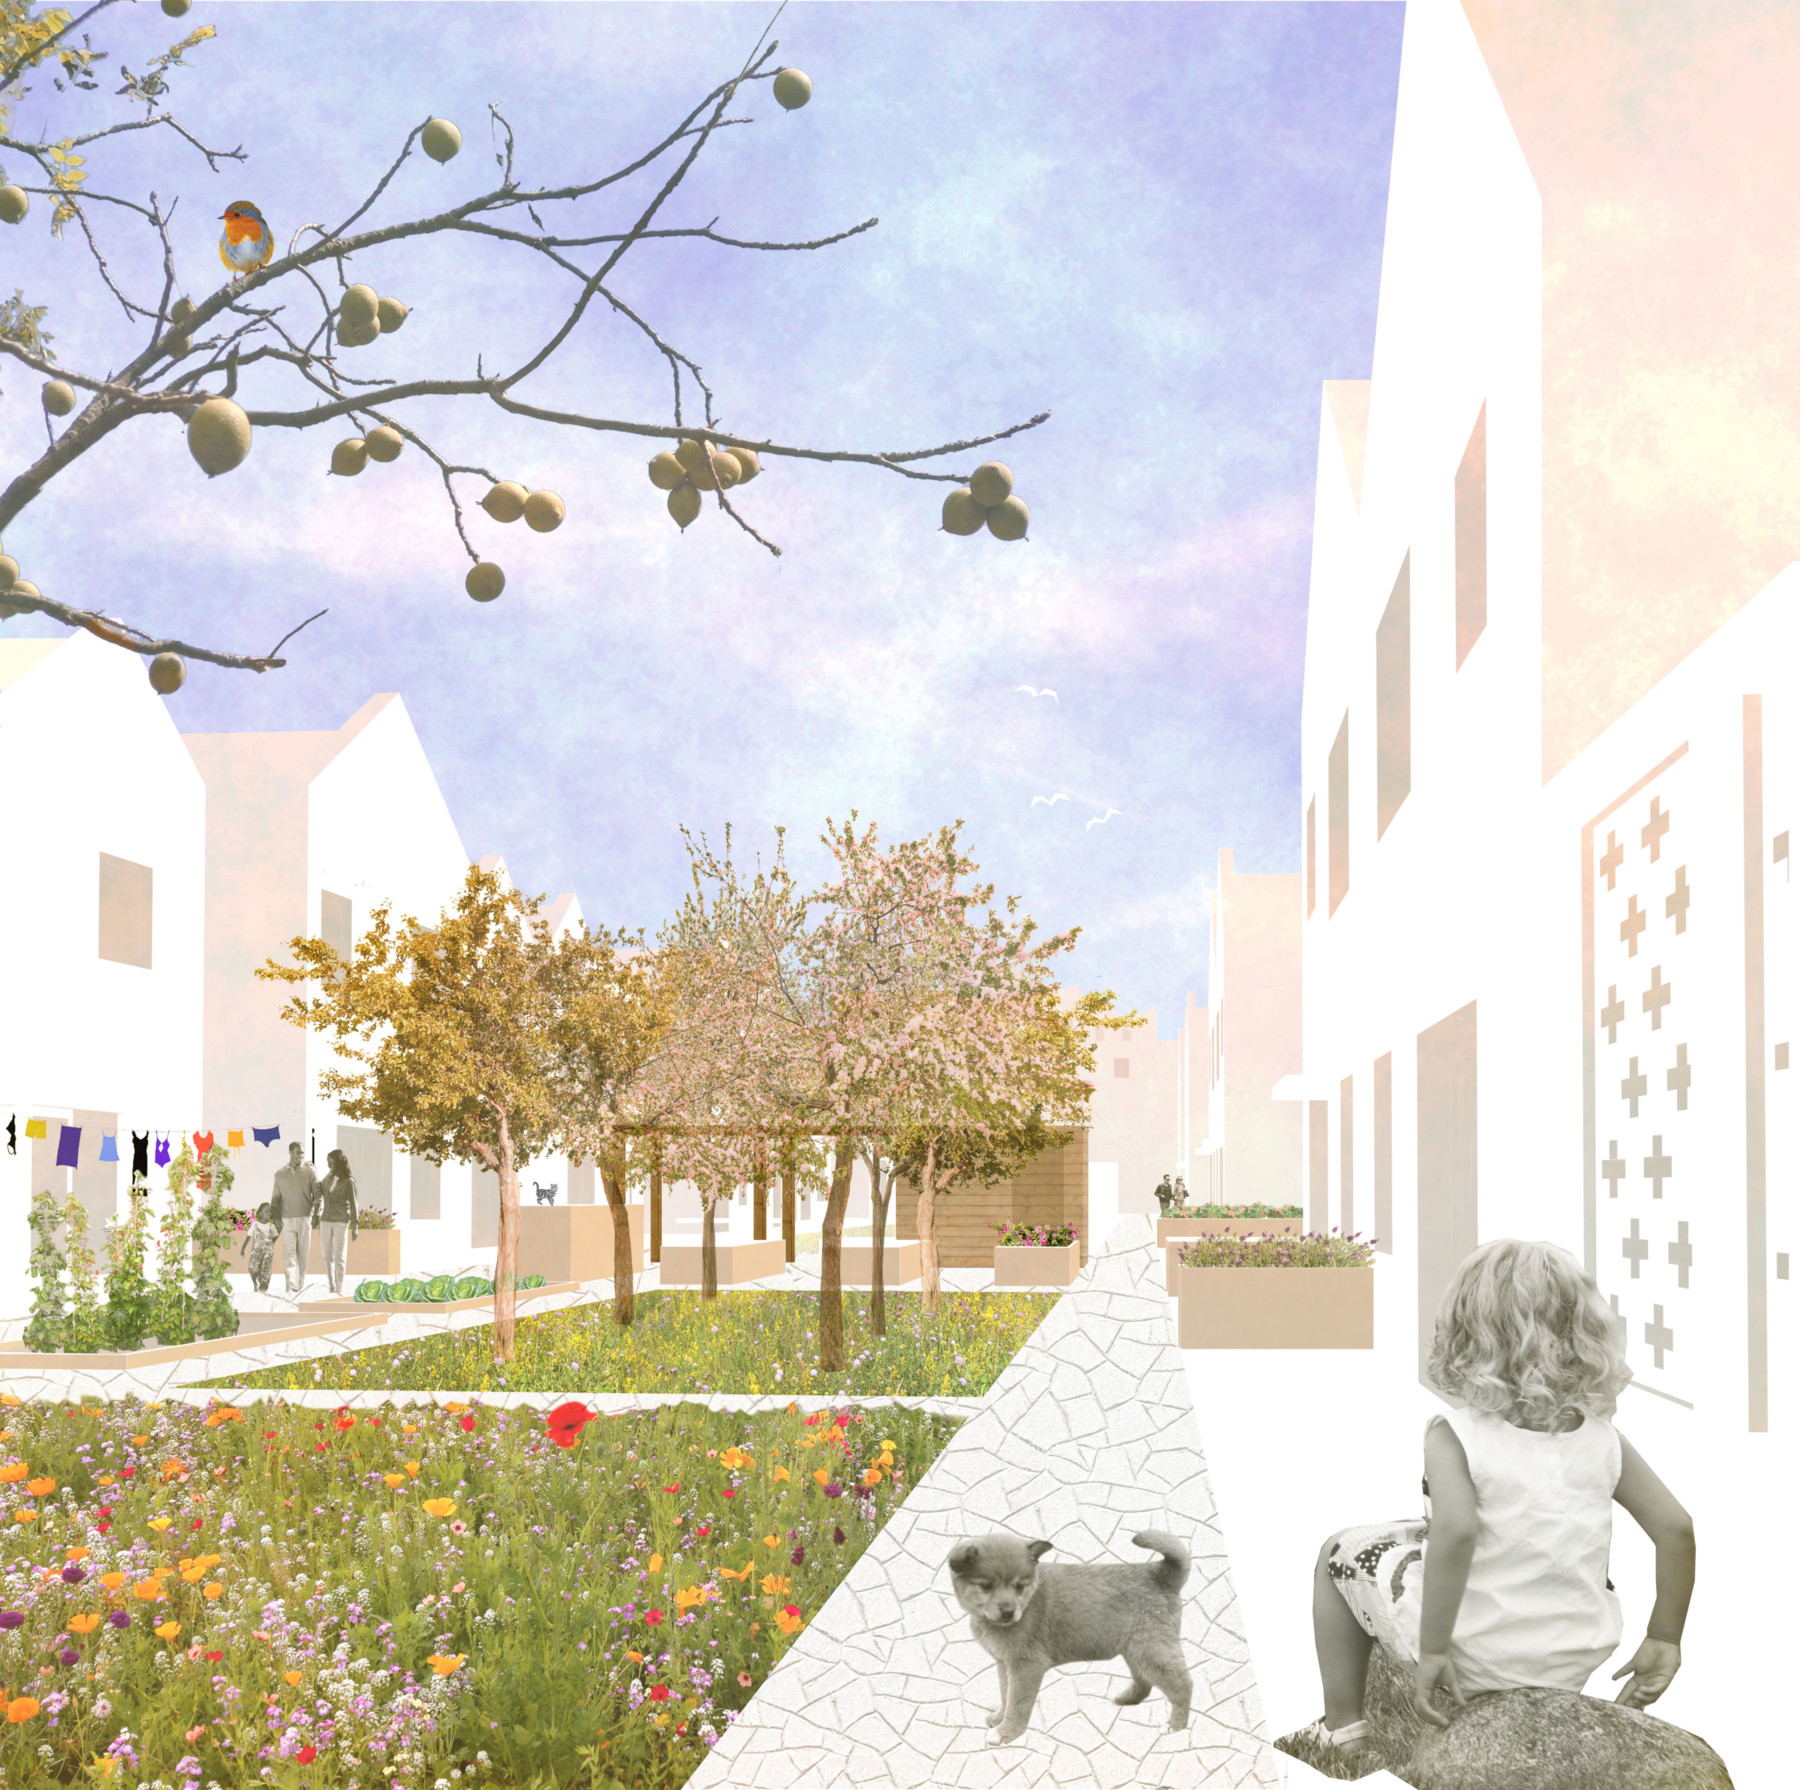 Sarah-Wigglesworth-Architects NWC courtyard-view 3600